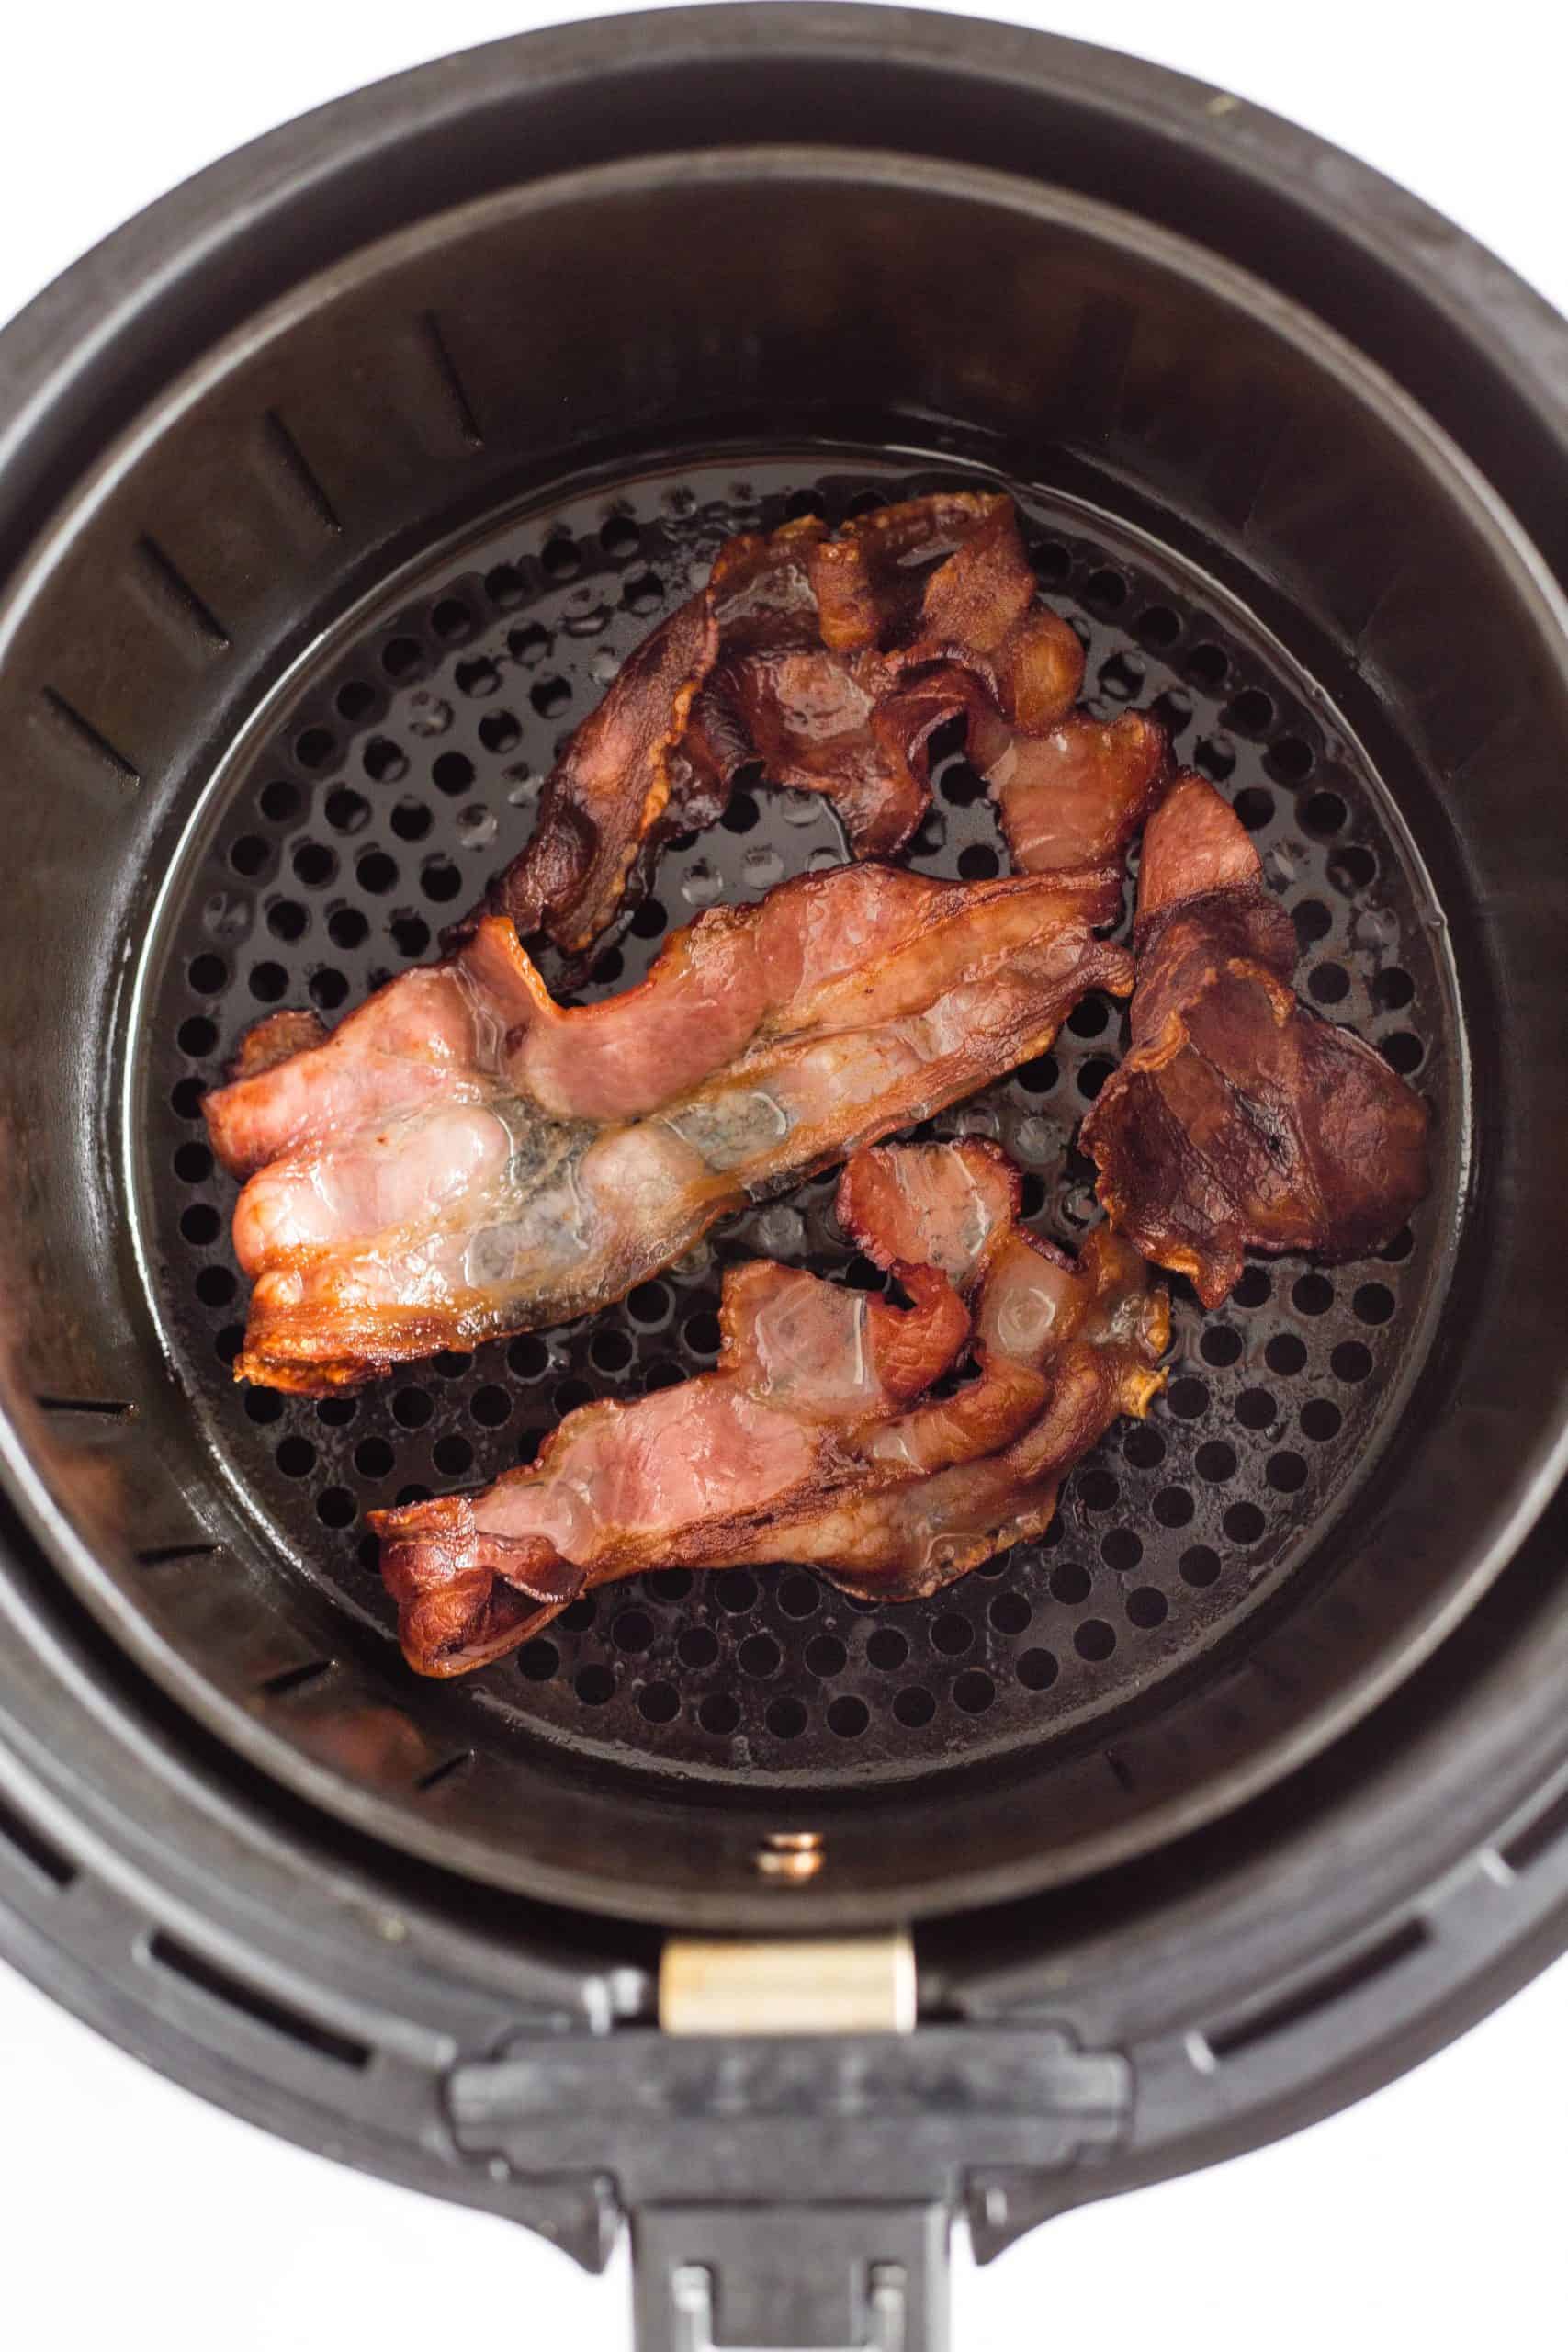 Crispy air fryer bacon slices in the air fryer basket.